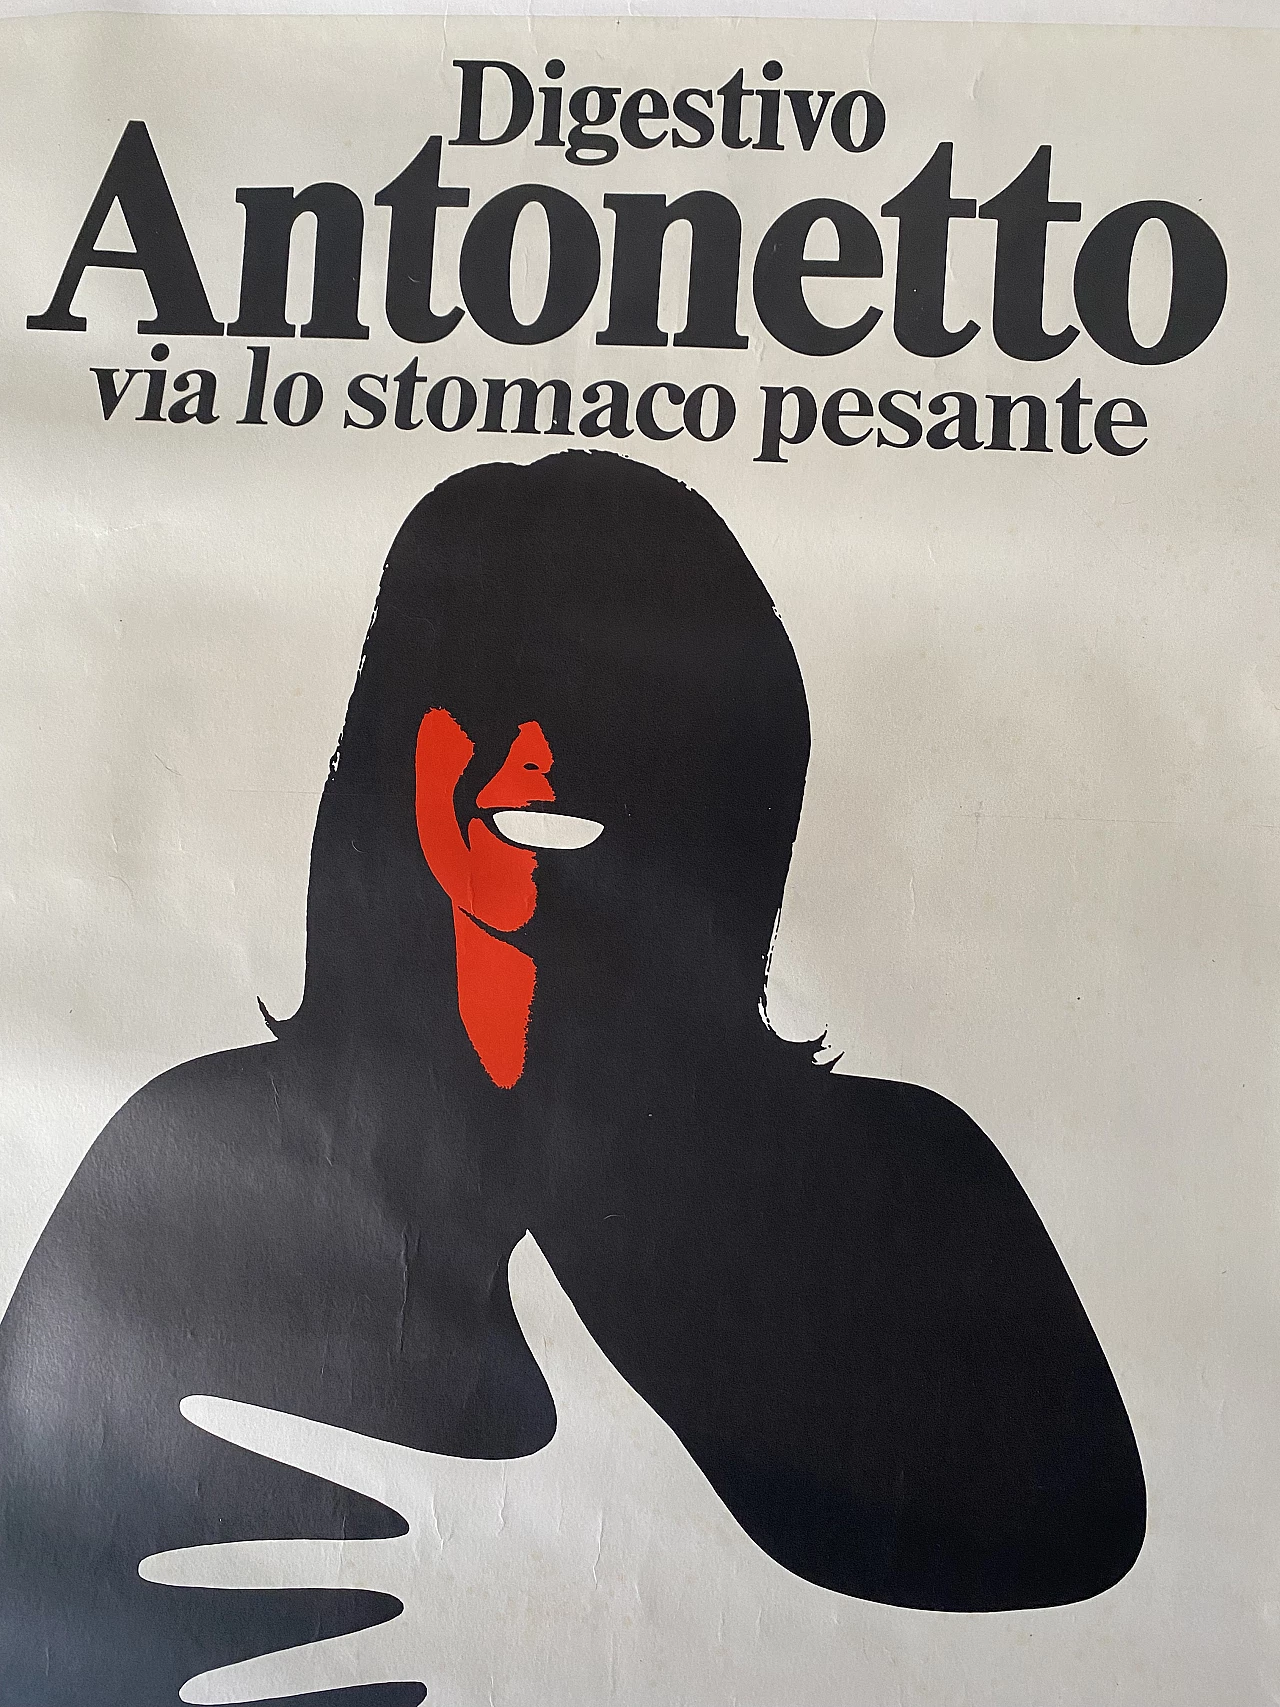 Digestivo Antonetto advertising poster, 1970s 4